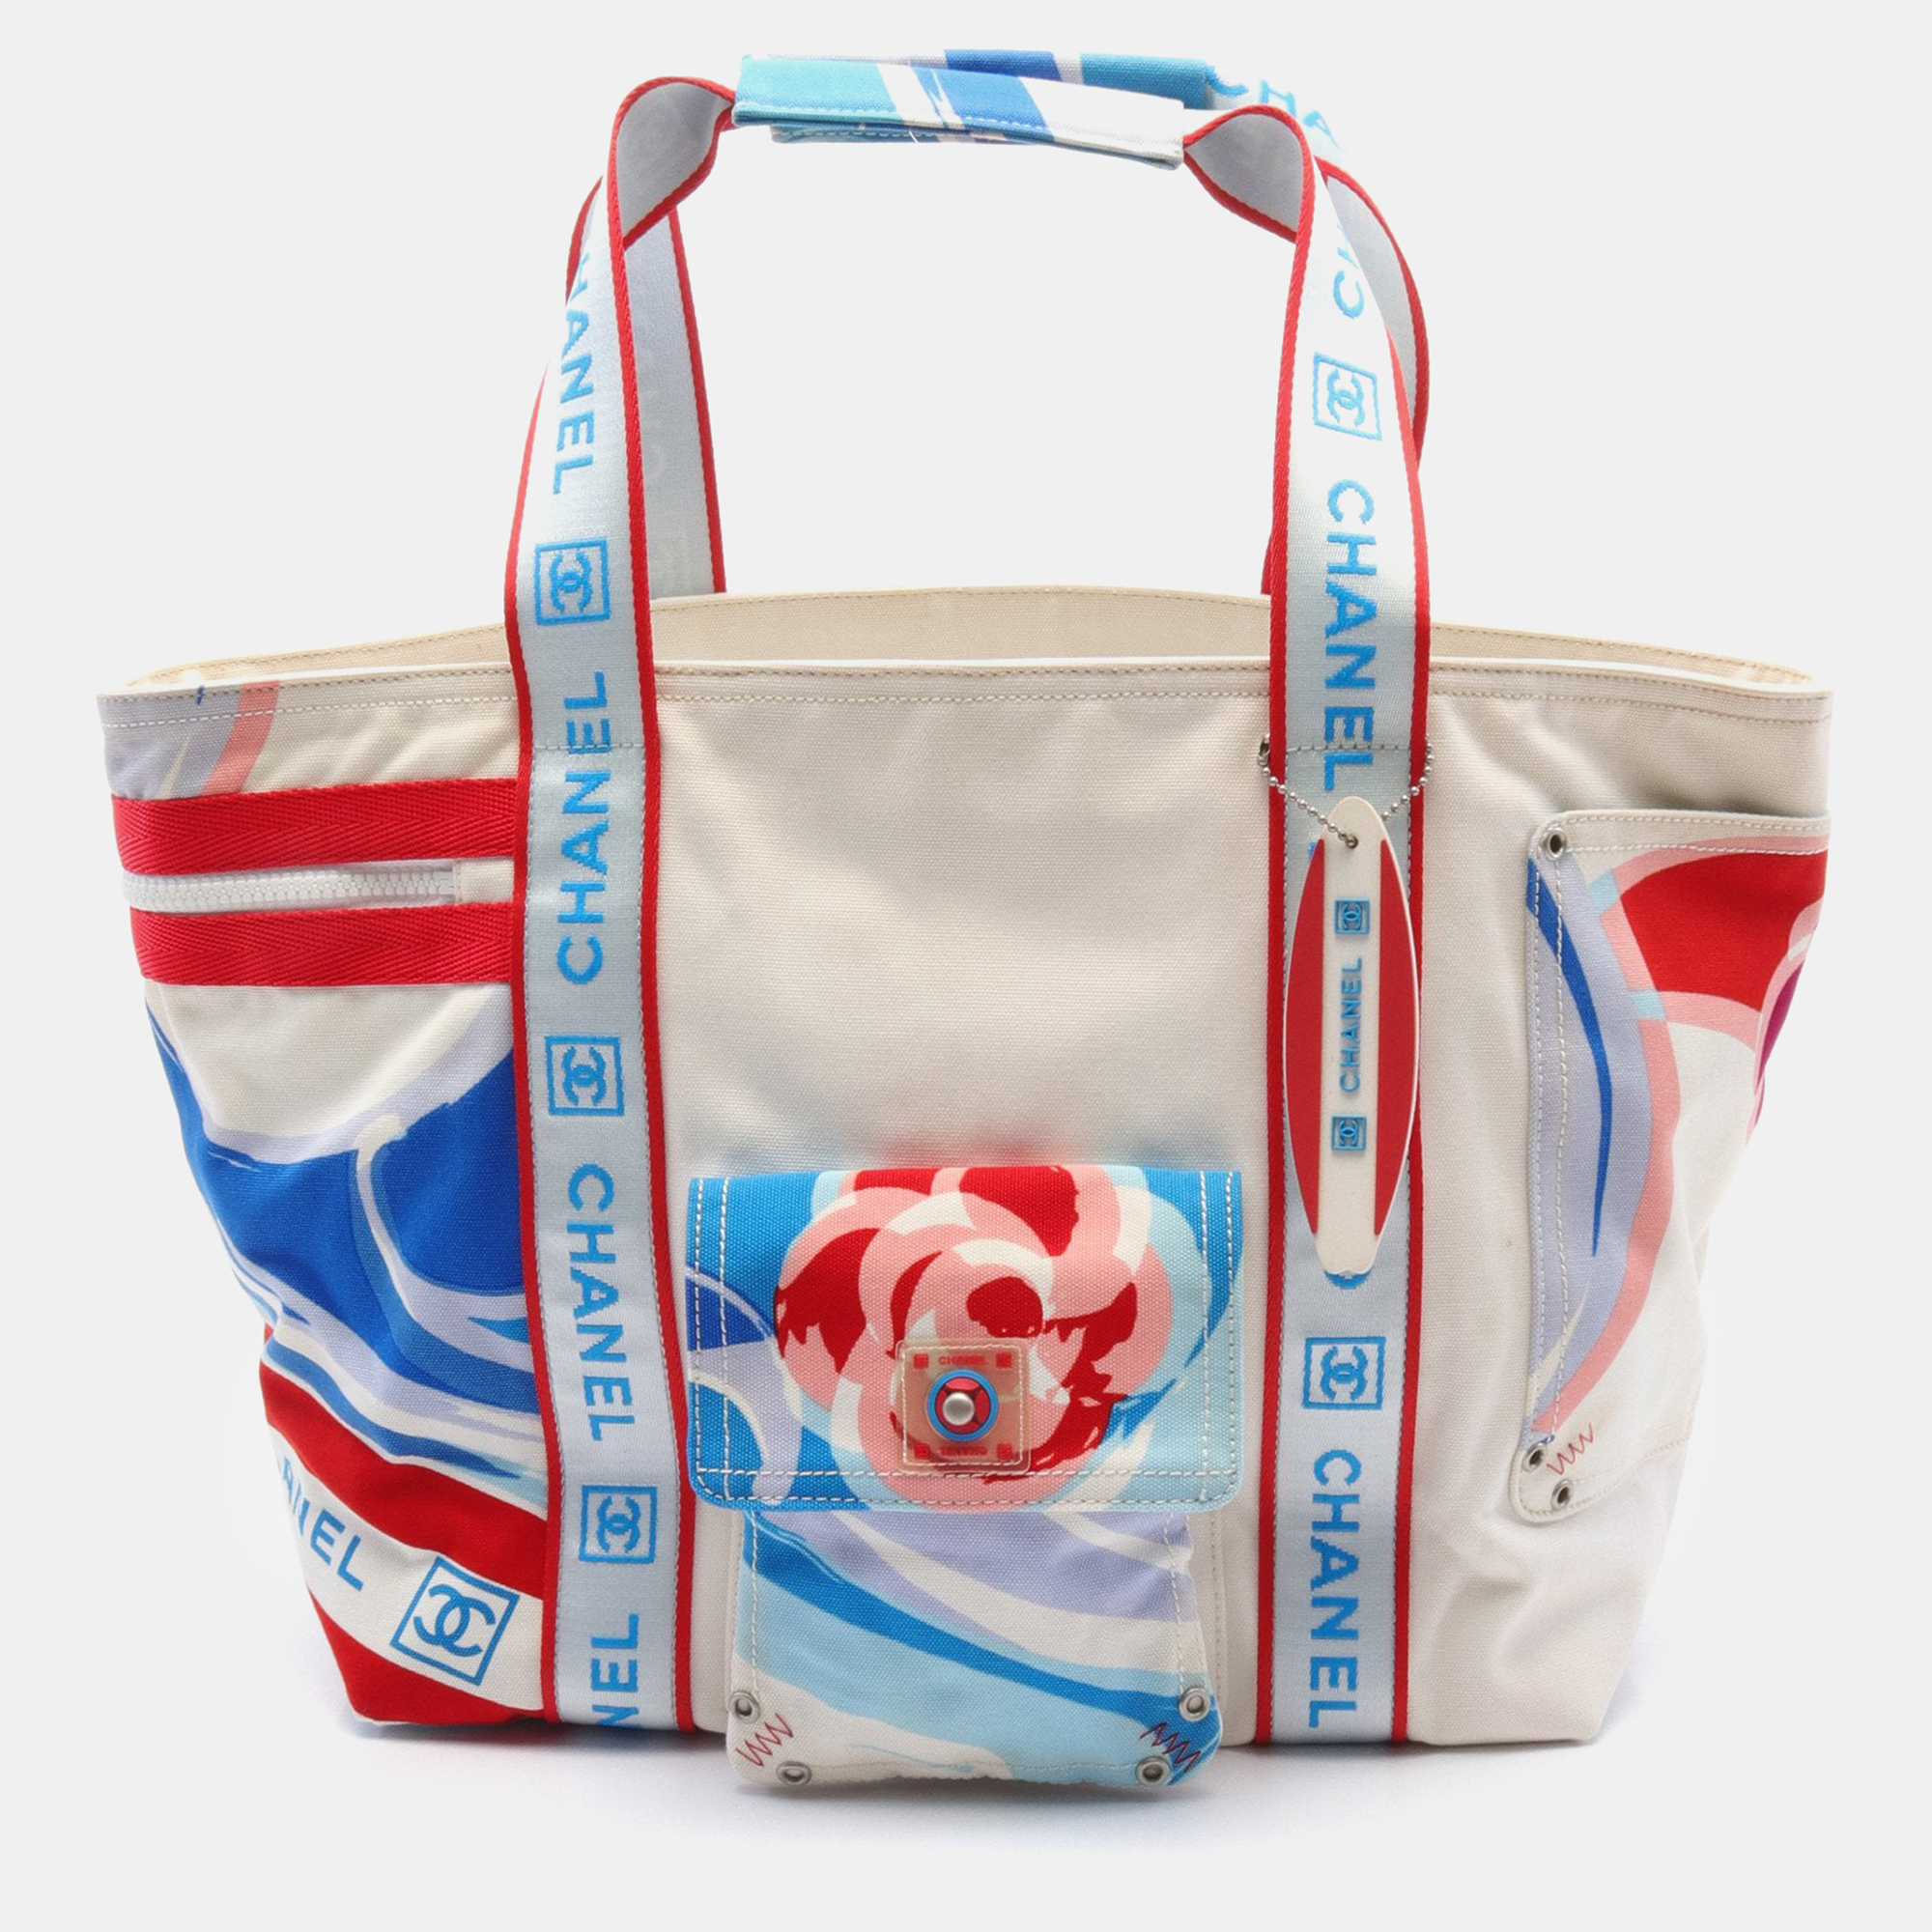 Chanel surf line high summer handbag tote bag canvas pvc white blue multicolor